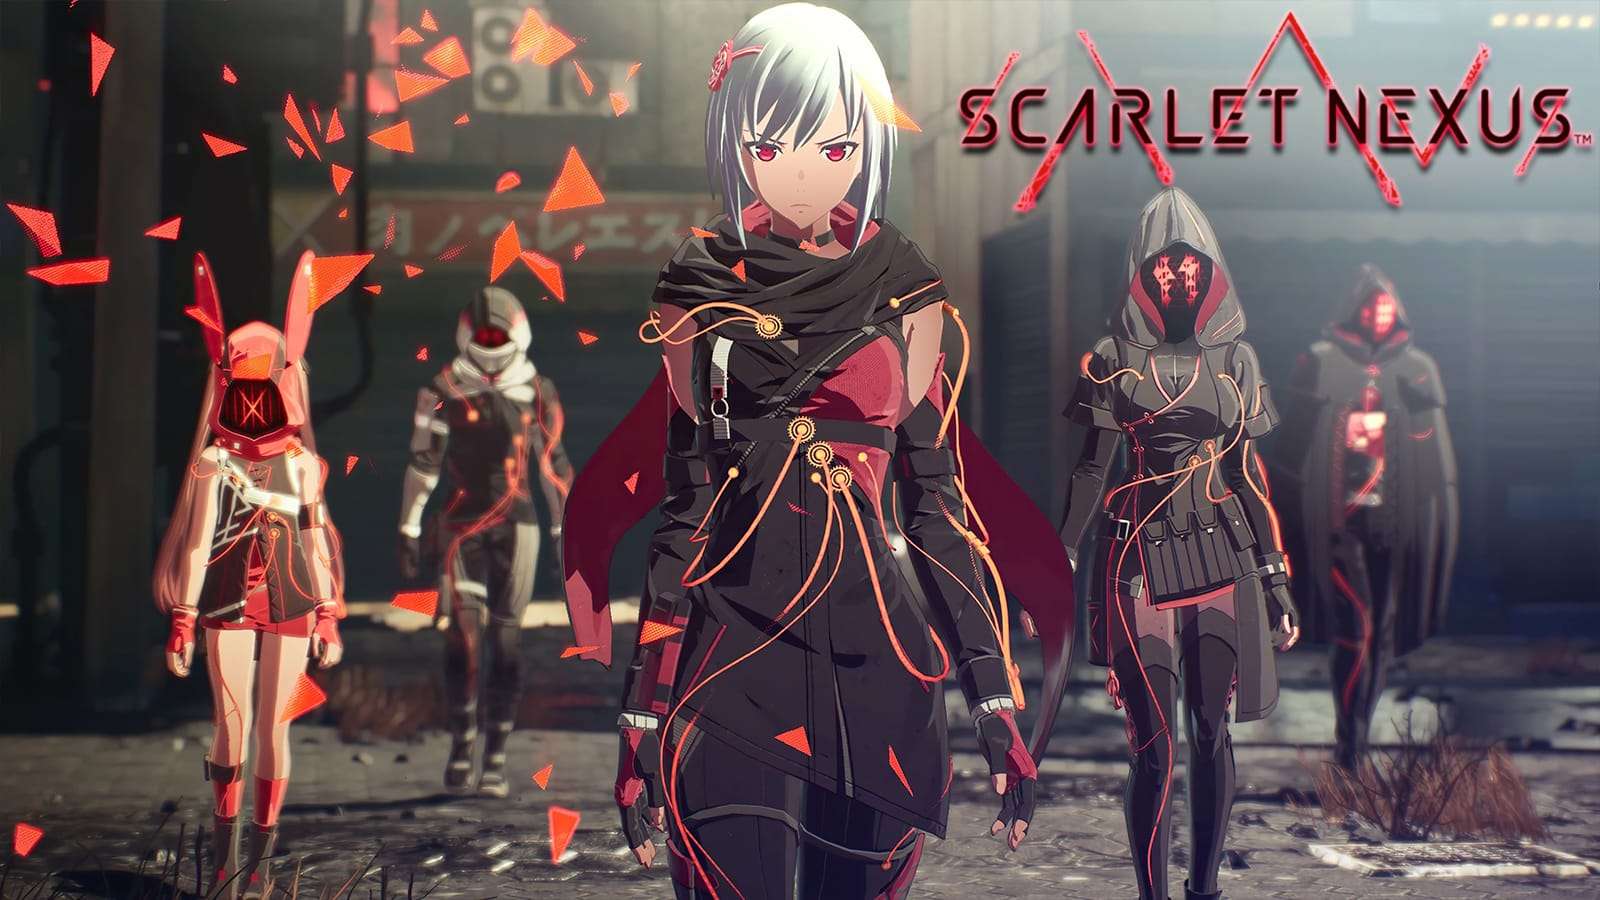 Scarlet Nexus protagonist Kasane